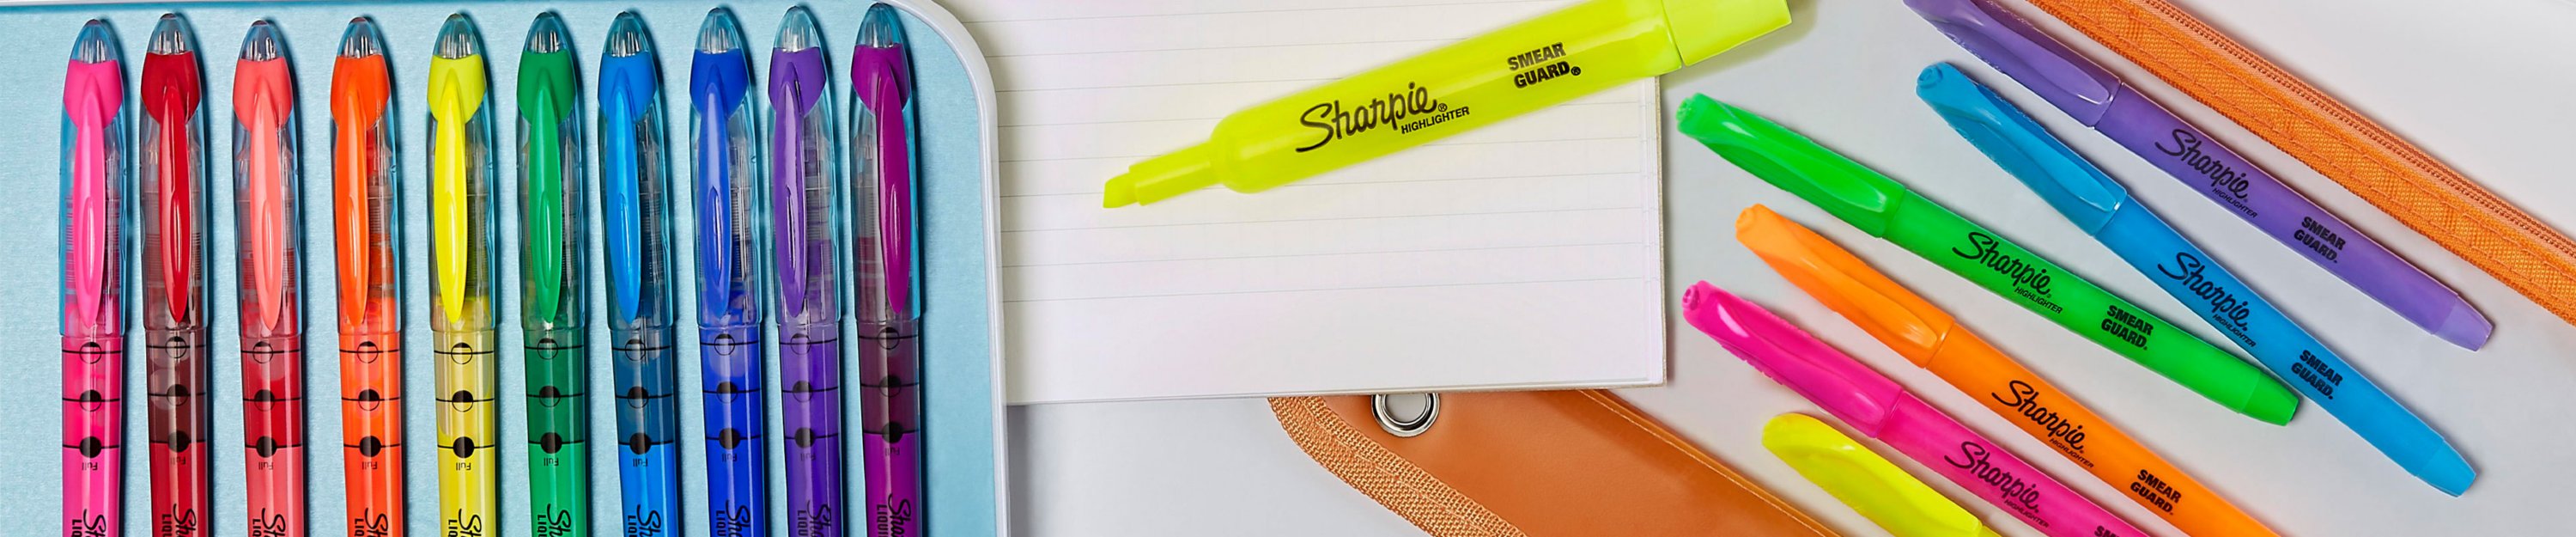 Sharpie® Gel Highlighter  Sharpie Markers & highlighters